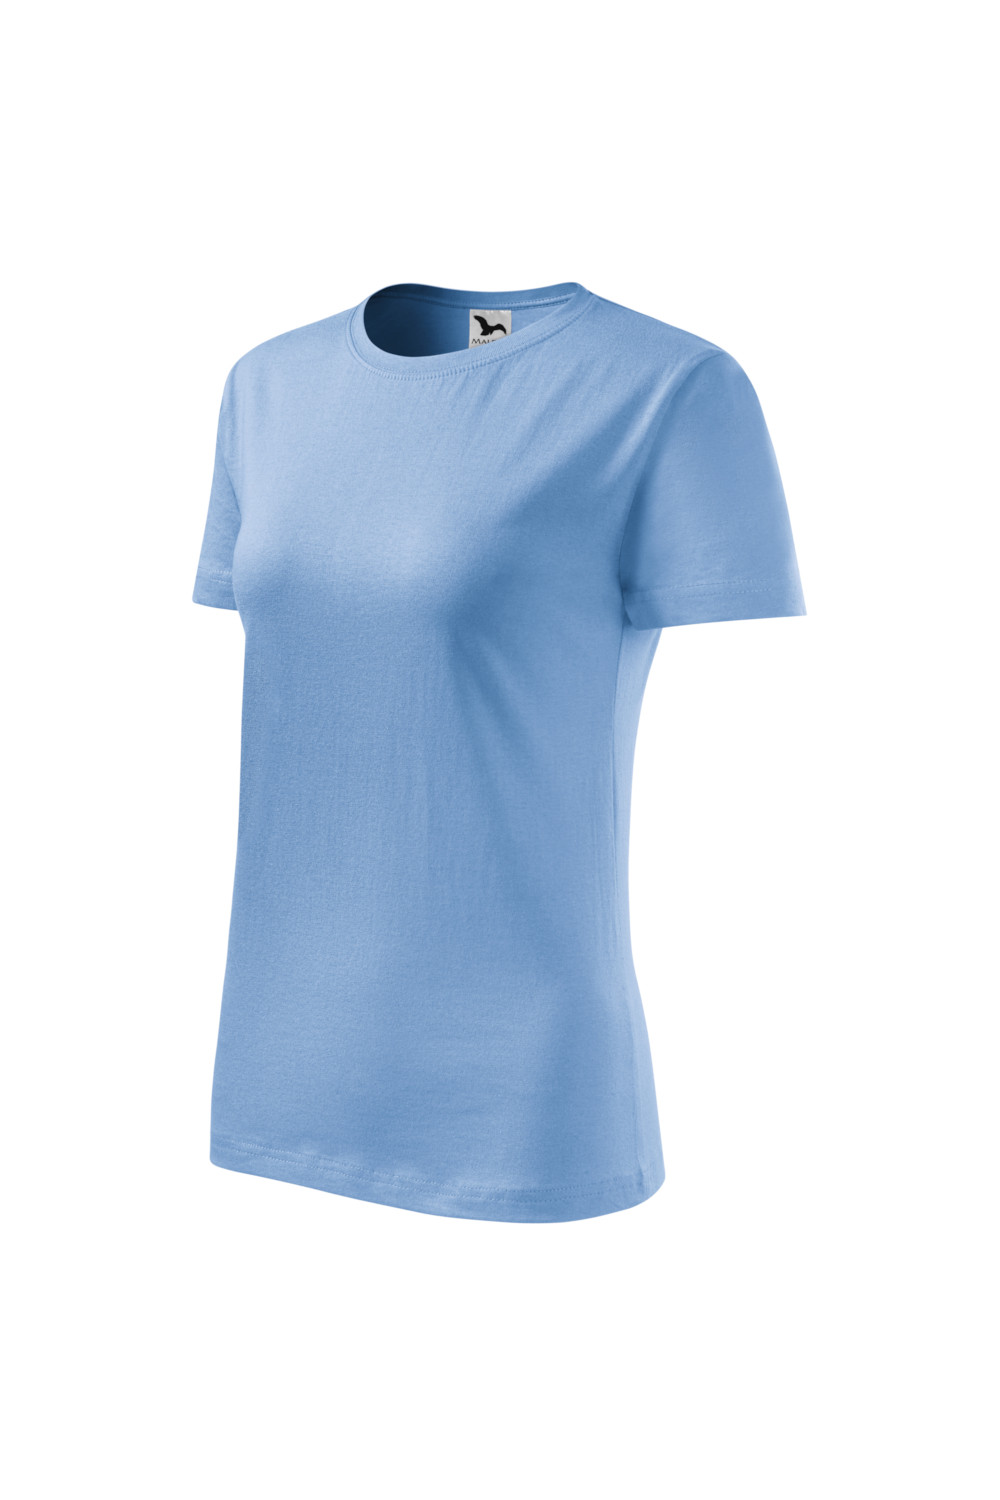 CLASSIC 133 MALFINI Koszulka damska 100% bawełna t-shirt błękit